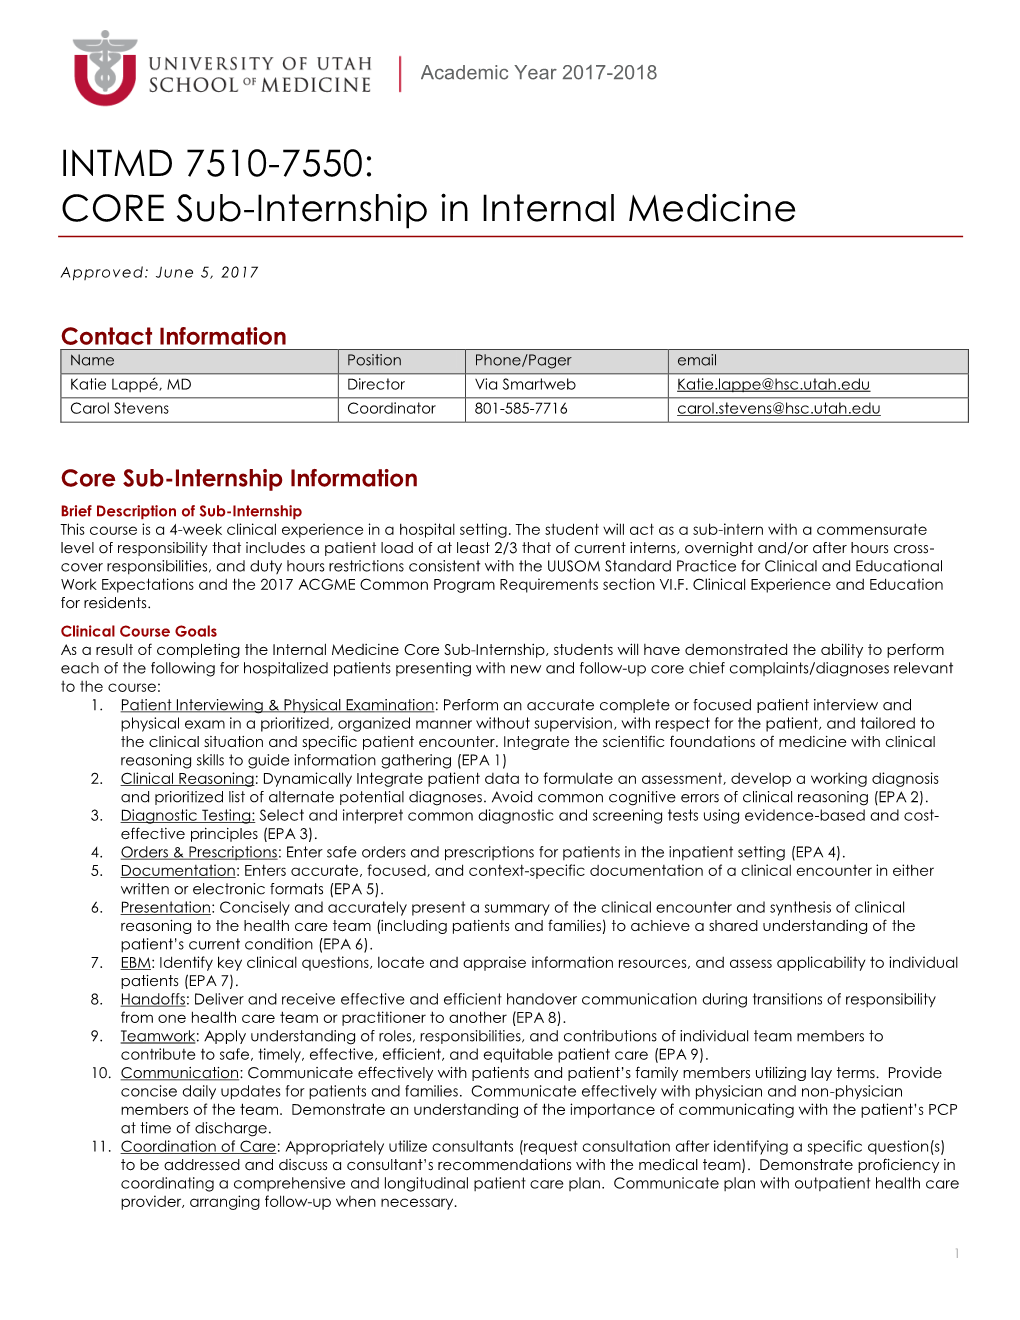 CORE Sub-Internship in Internal Medicine